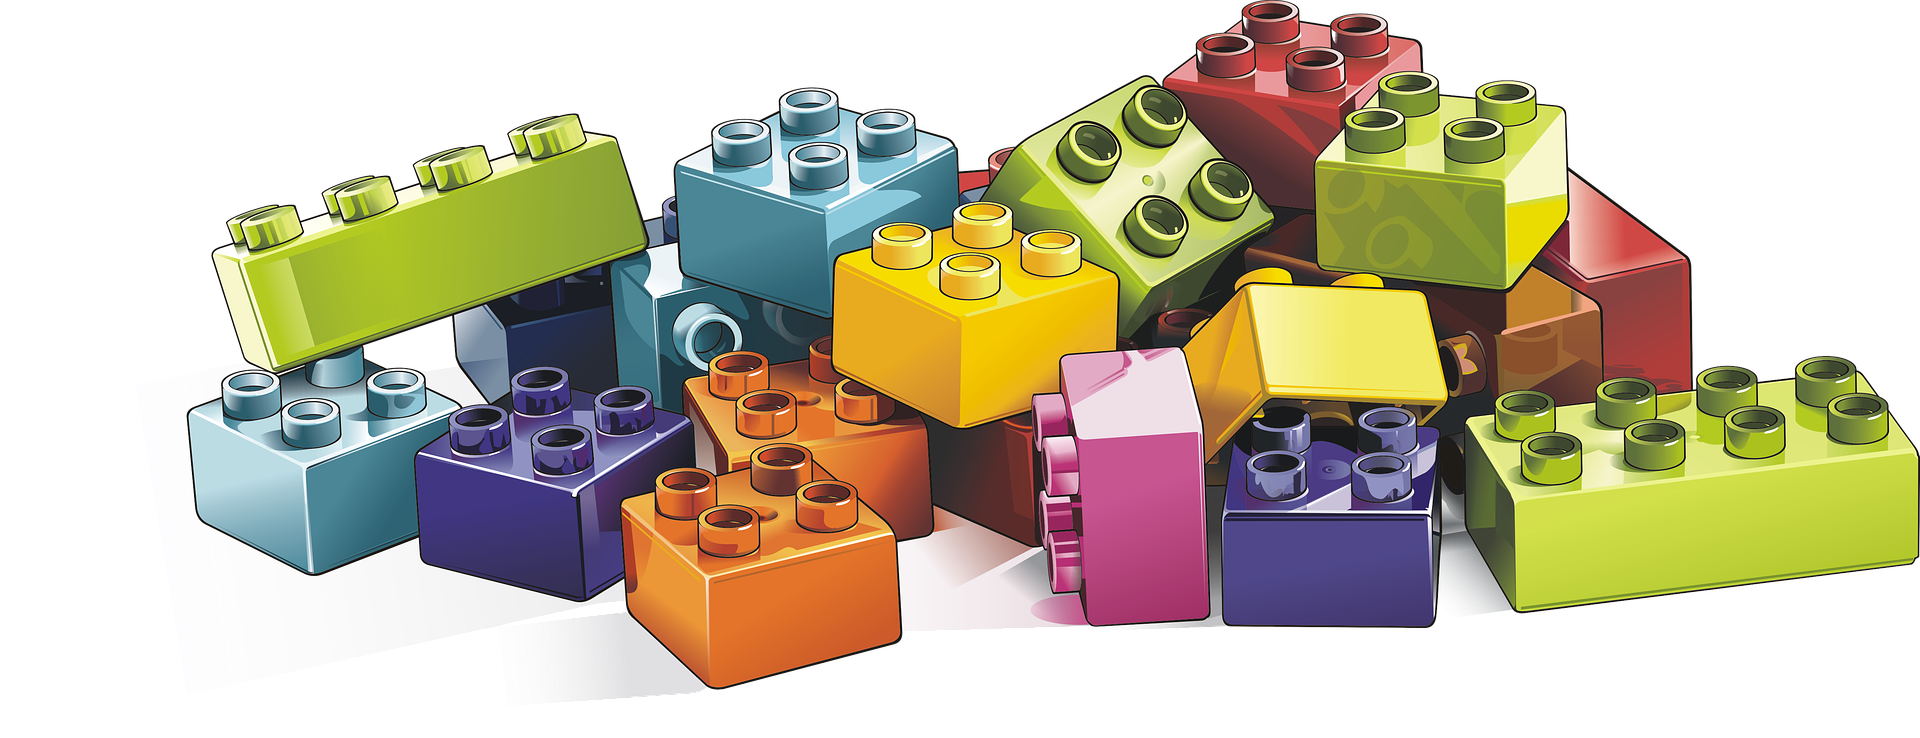 illustration of a pile of LEGO bricks